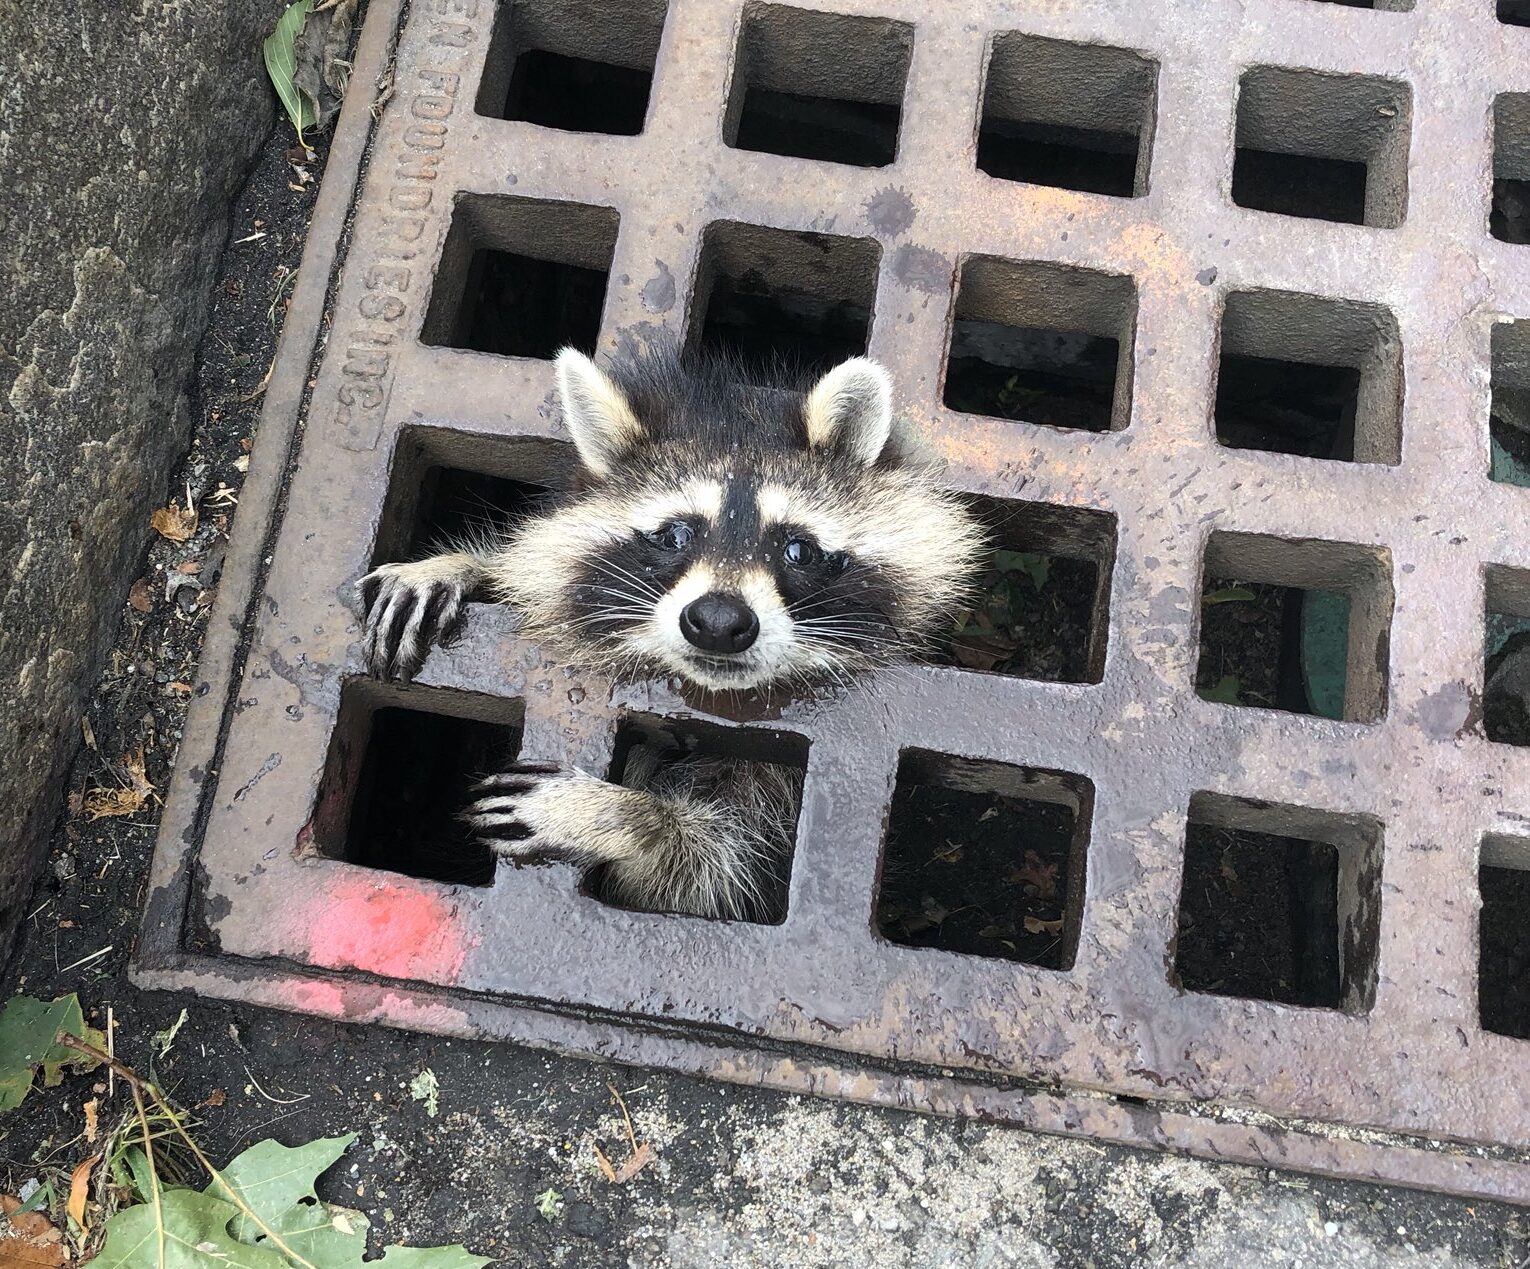 A raccoon stuck in a grate